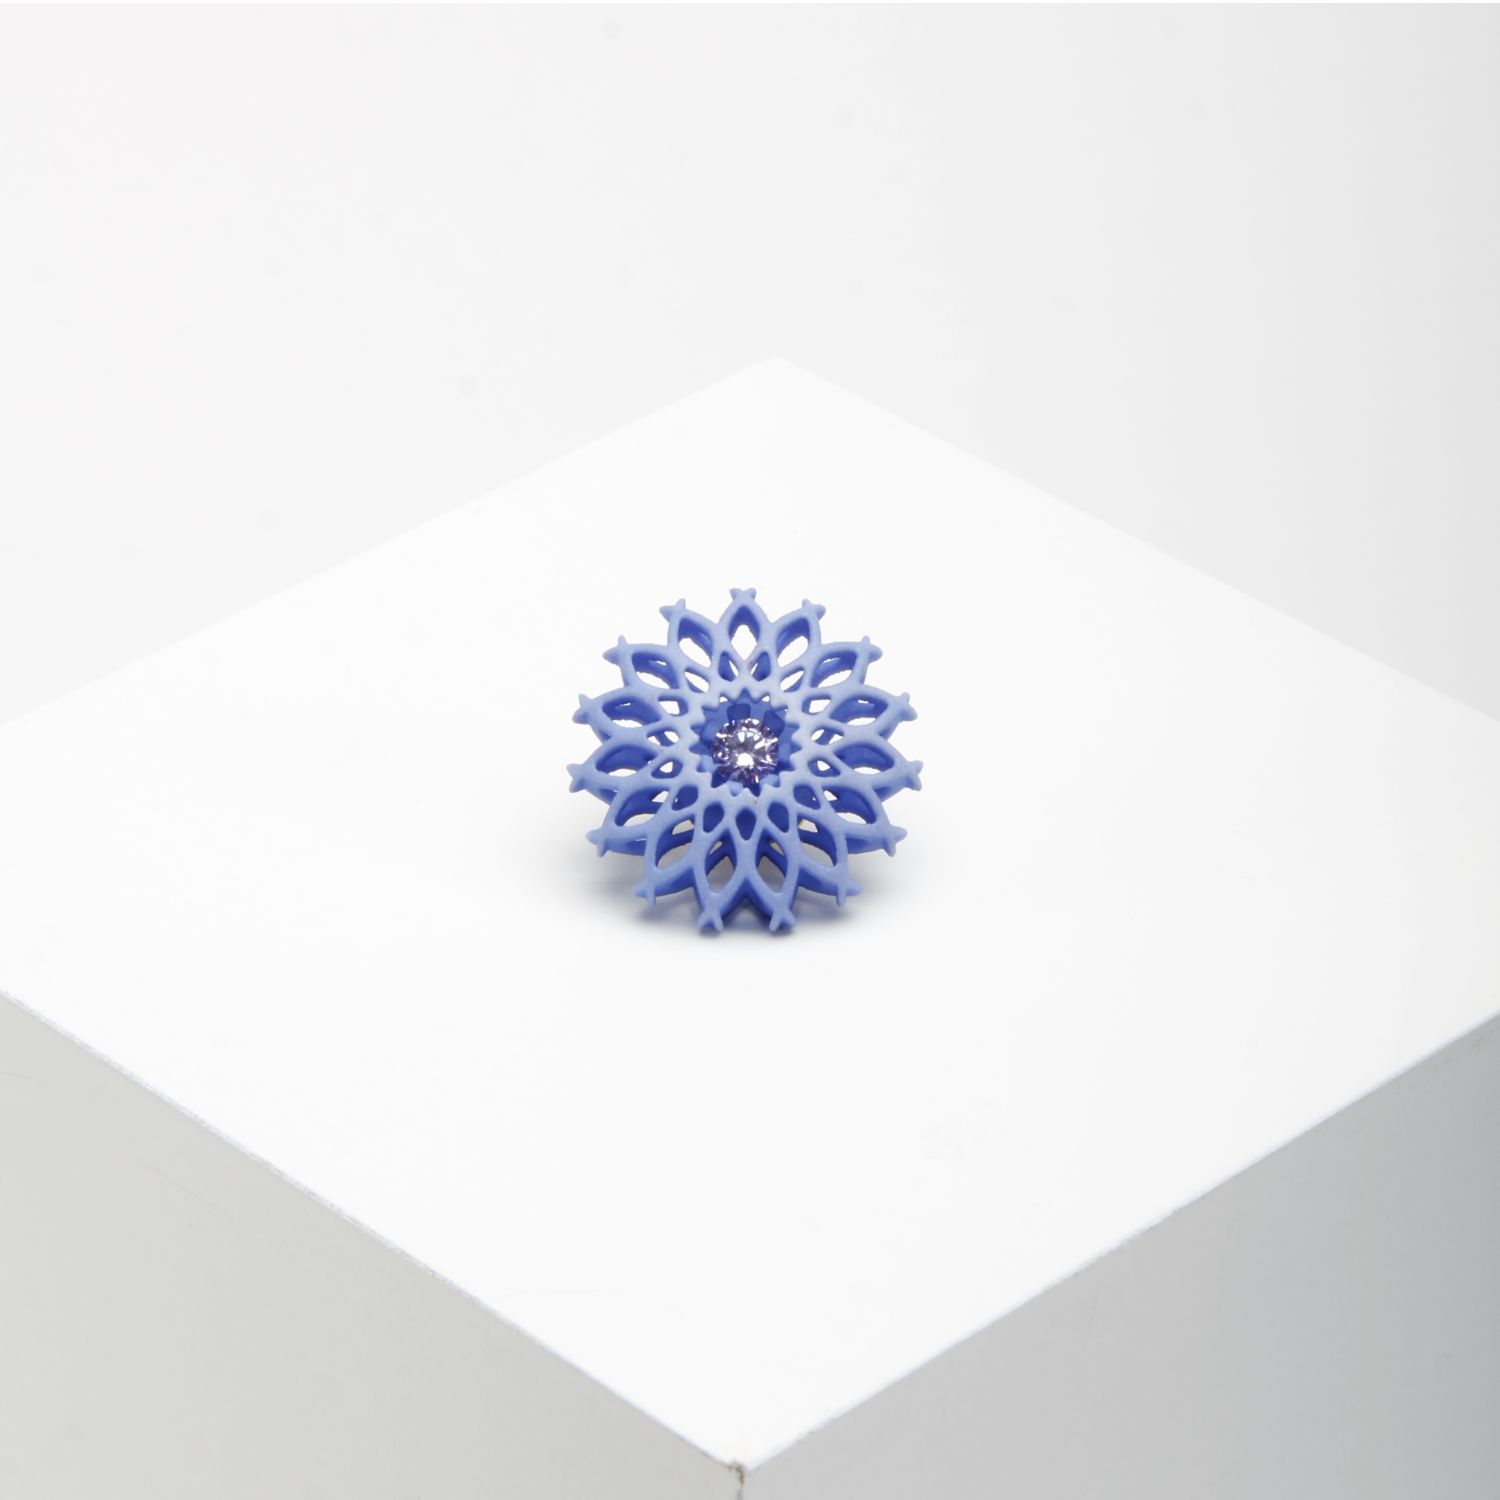 Kormar: Mandala Pin w Gemstone Product Image 3 of 3